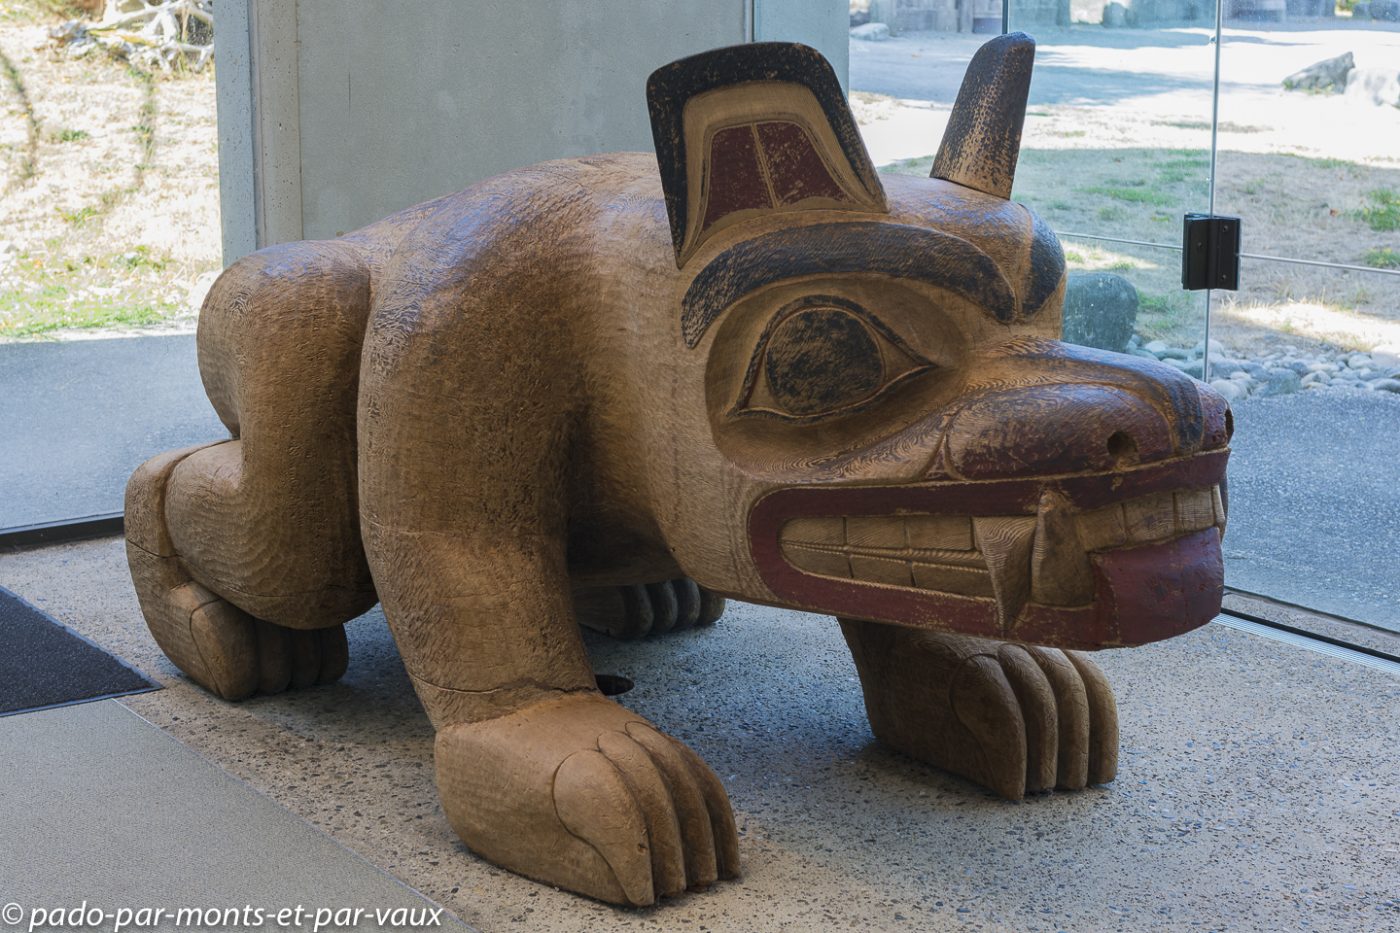  Maisons Haida - Musée d'Anthropologie - Vancouver